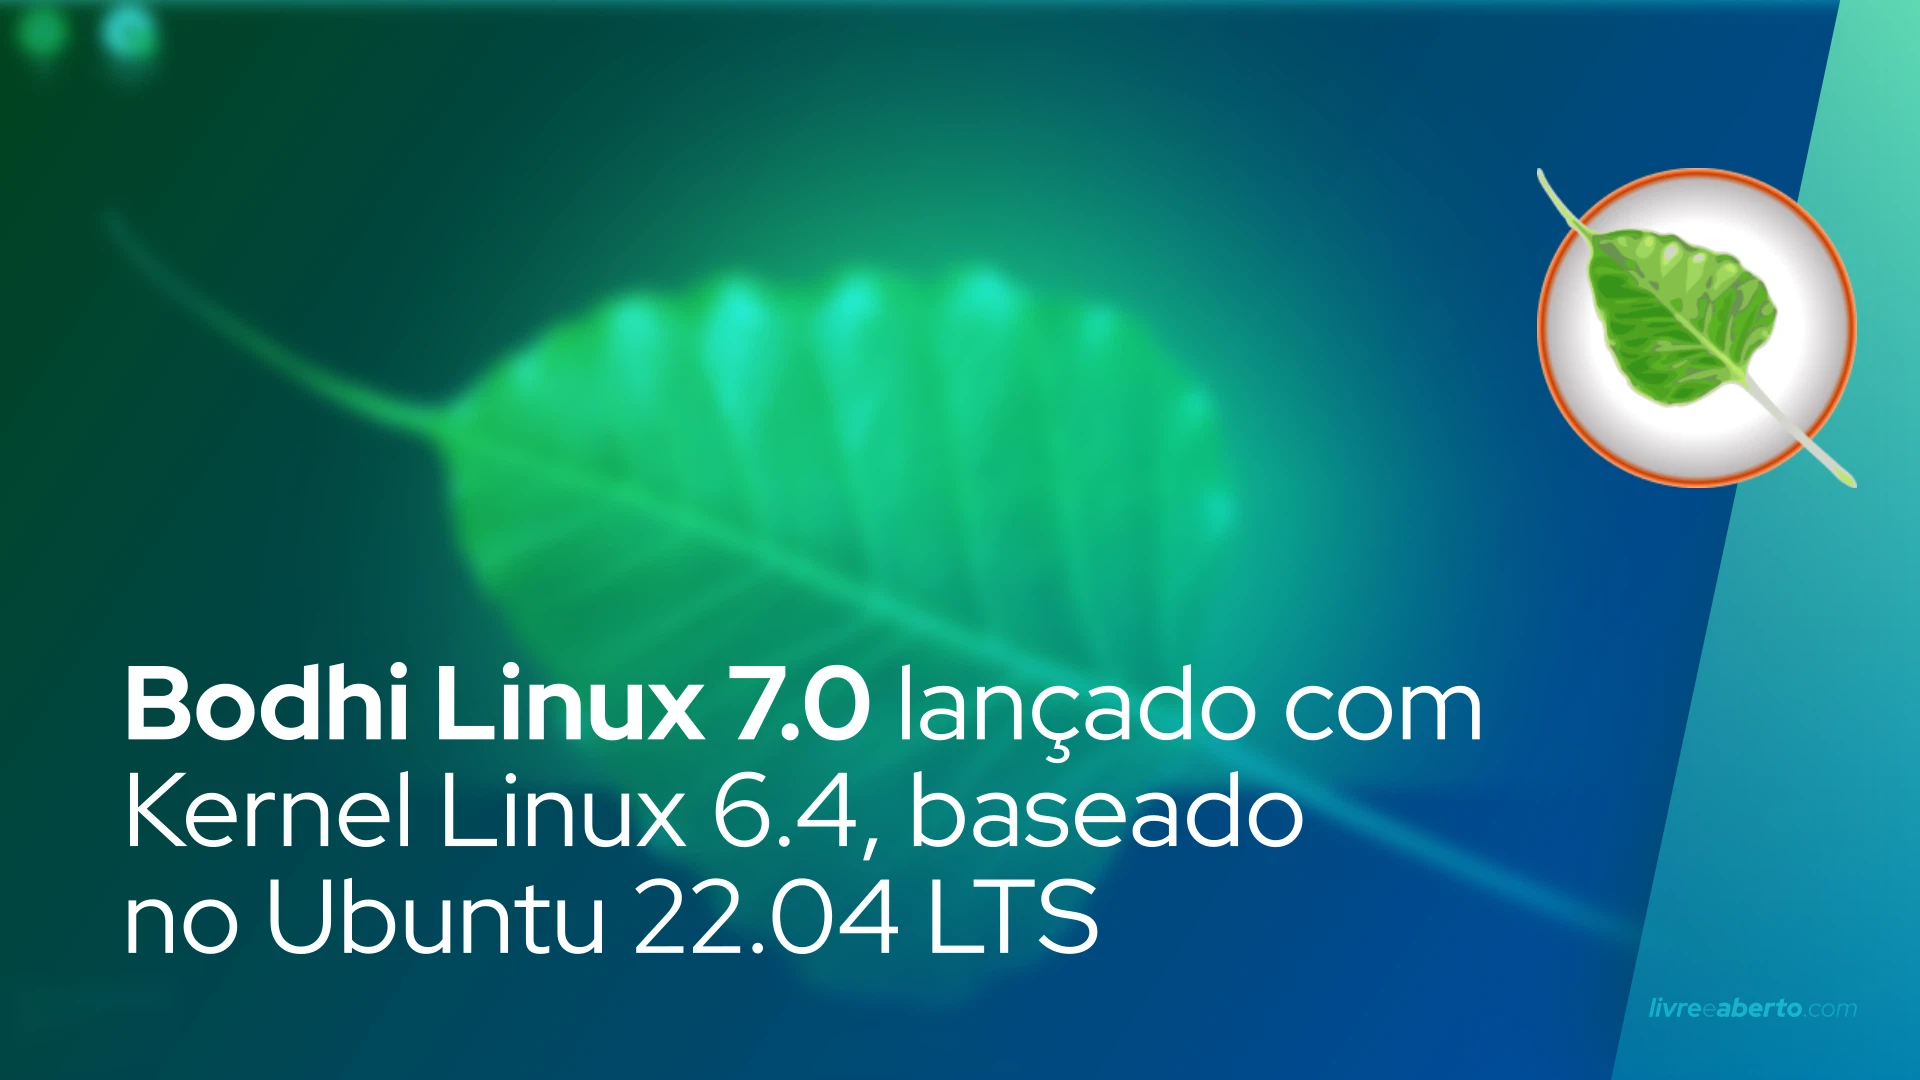 Bodhi Linux 7.0 lançado com Kernel Linux 6.4, baseado no Ubuntu 22.04 LTS